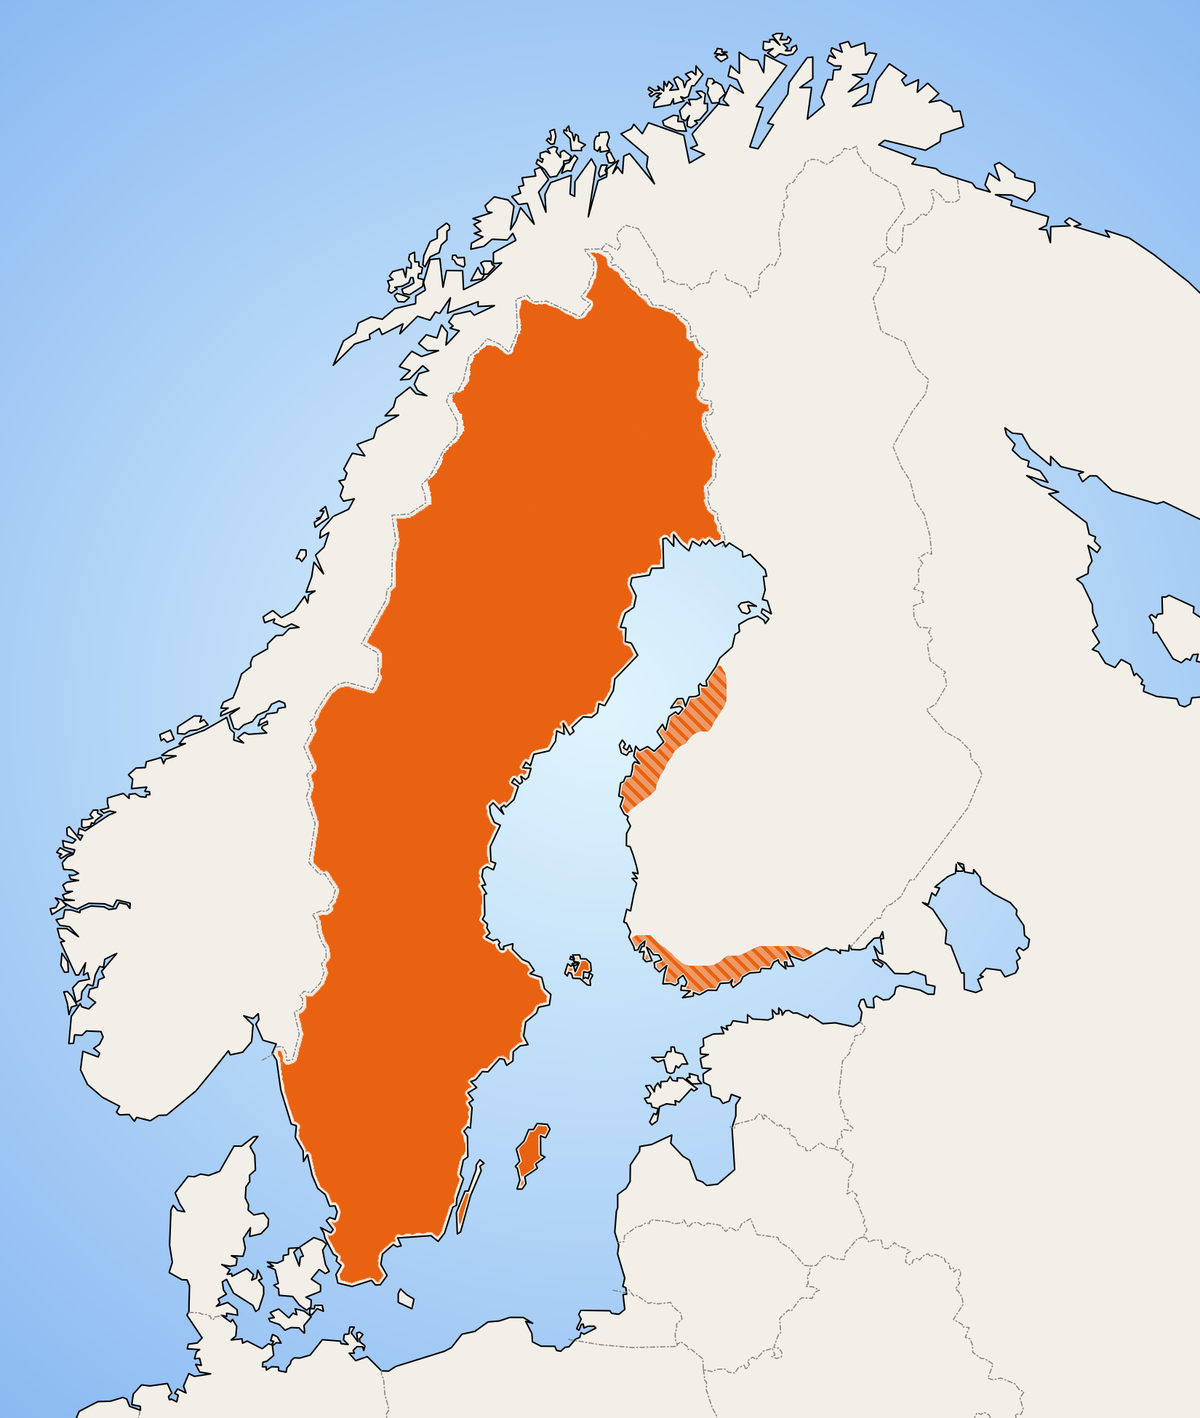 Stockholm Syndrome (Swedish band) - Wikipedia